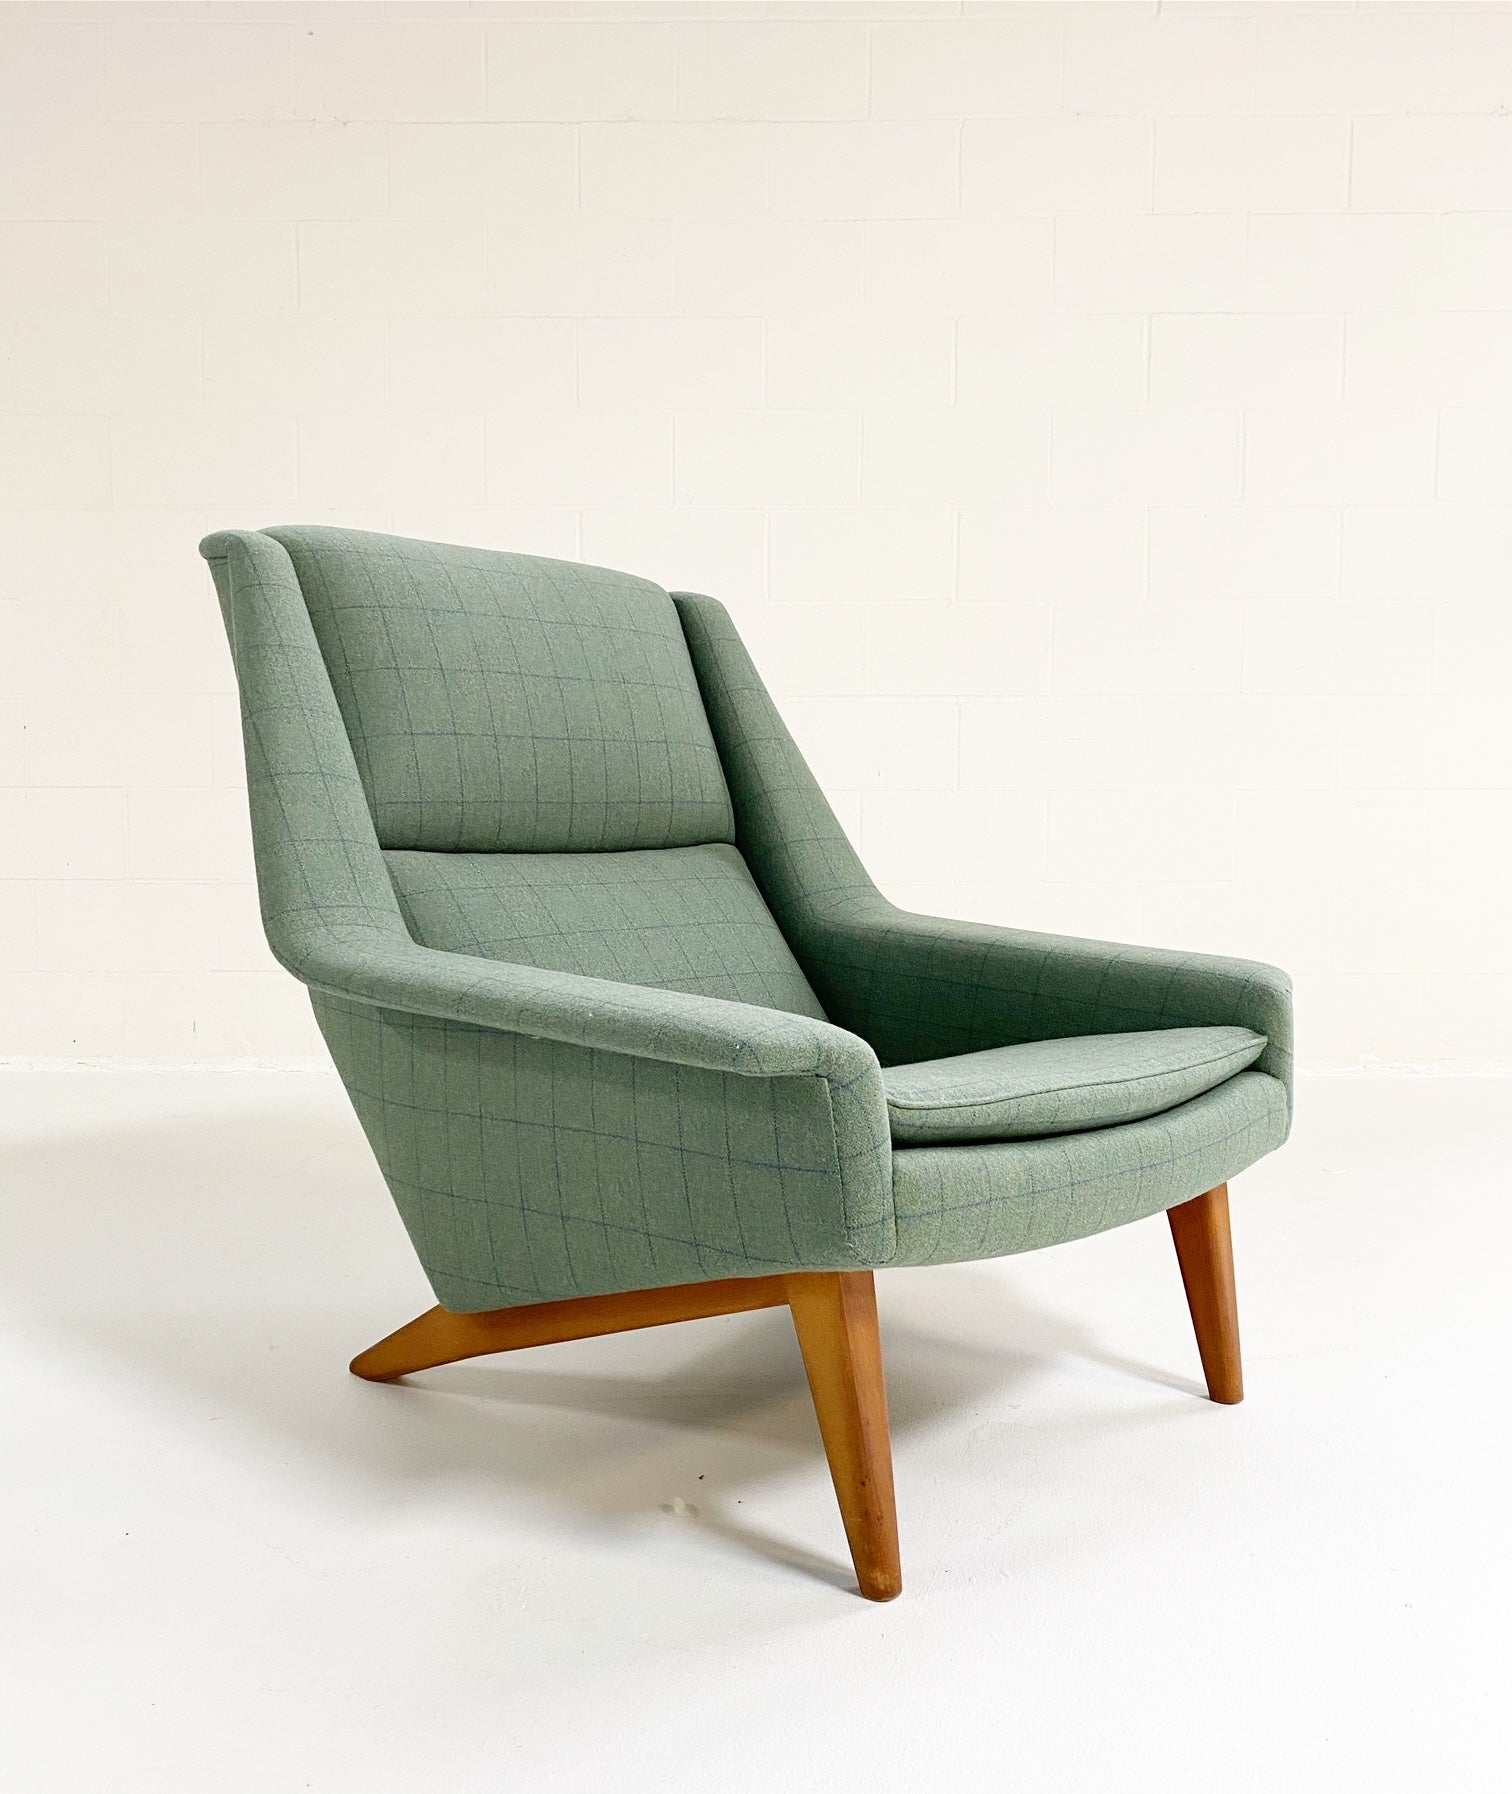 Model 4410 Lounge Chair